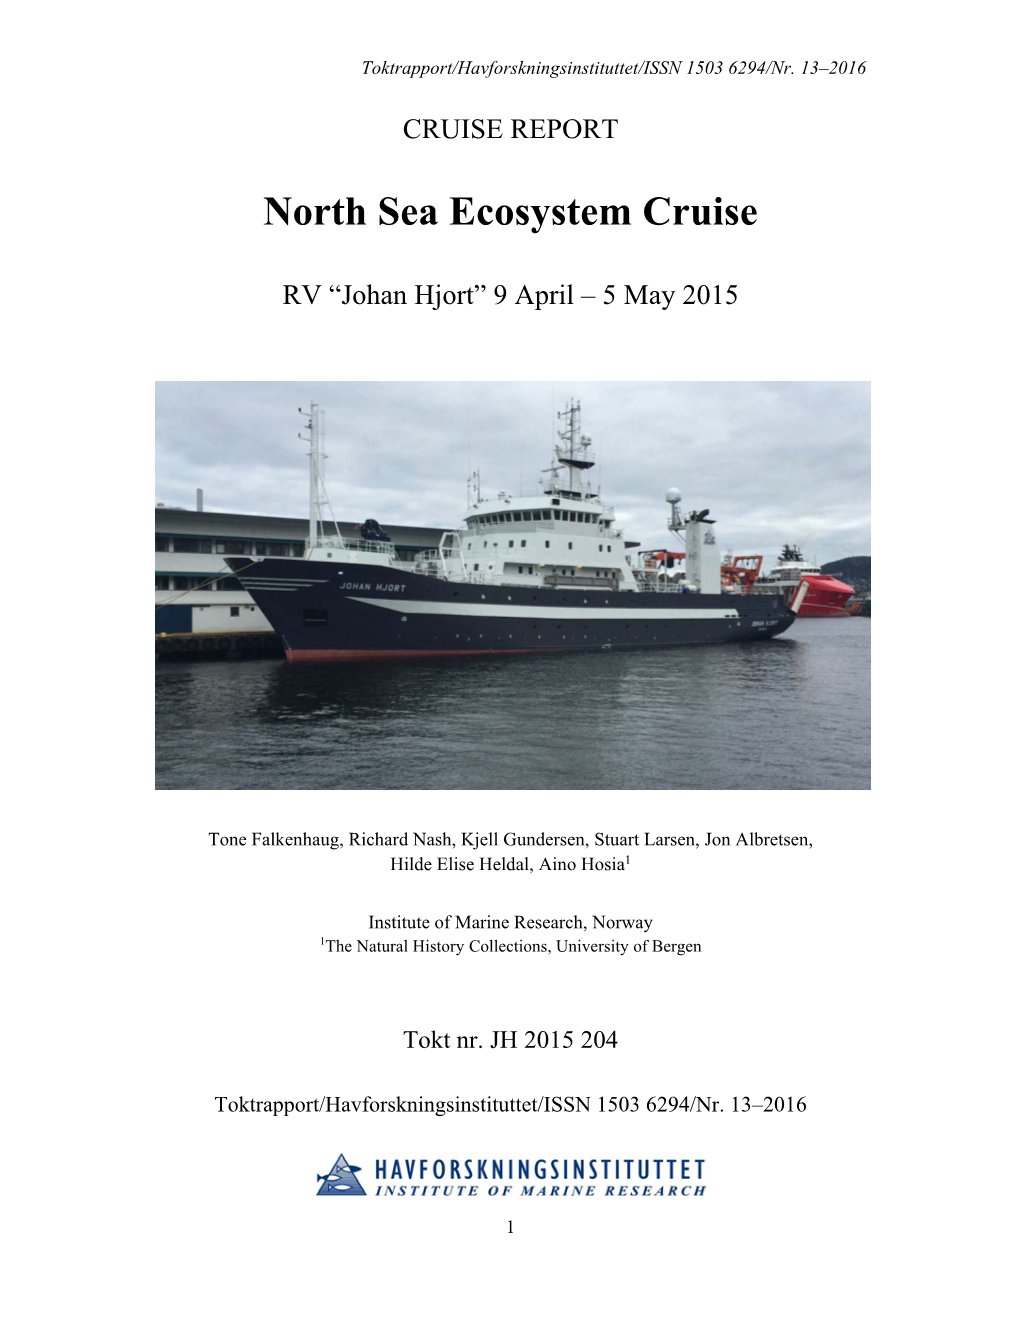 North Sea Ecosystem Cruise